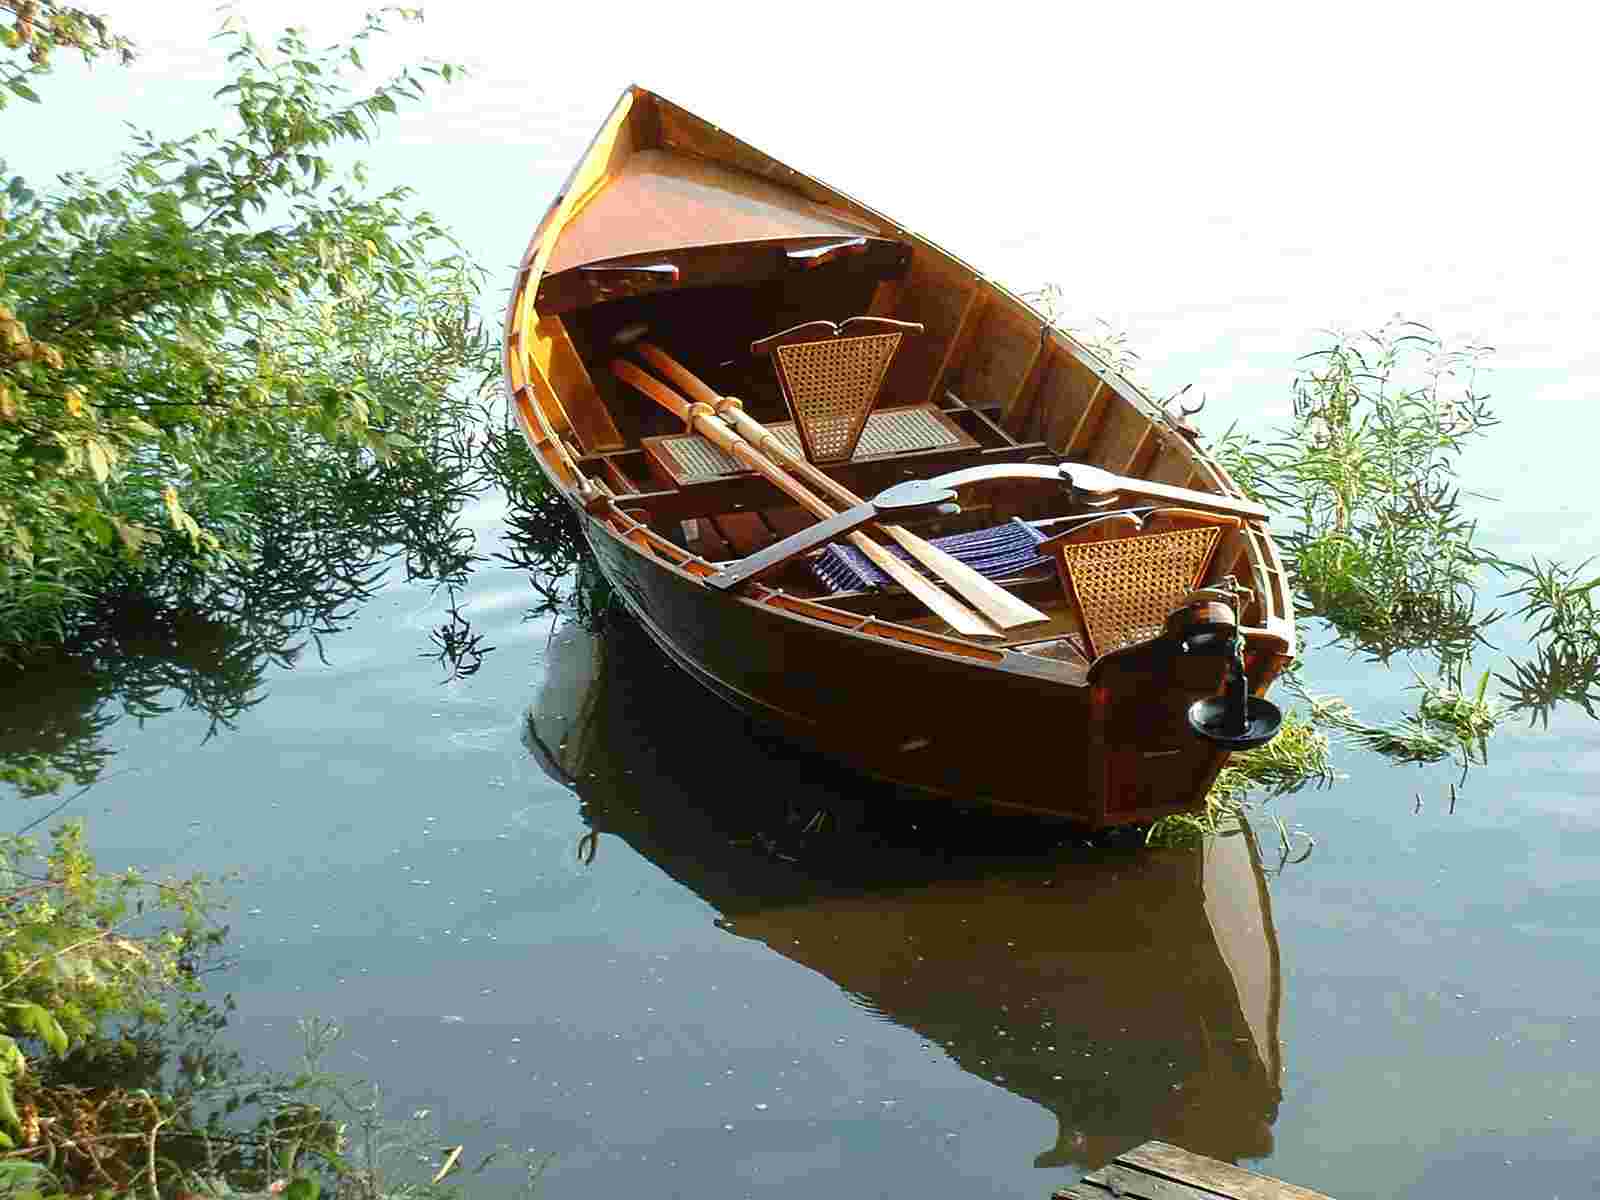  god mckenzie river drift boat plans flat bottom plywood boat plans